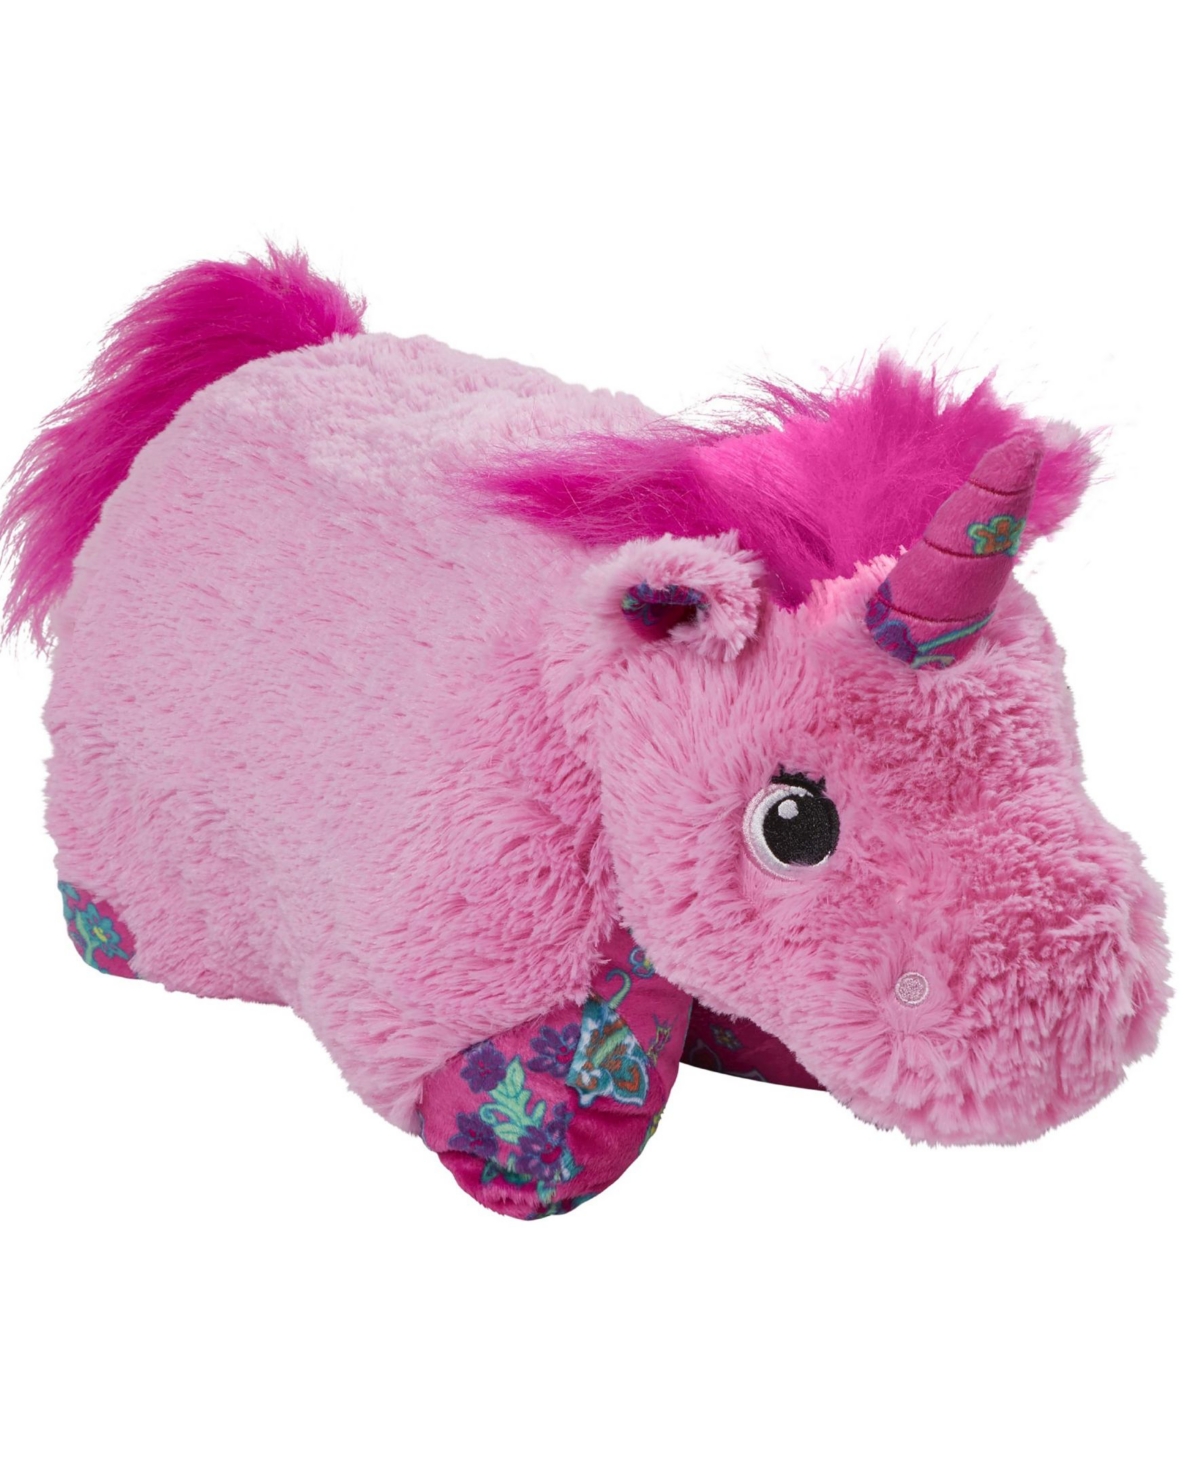 Pillow Pets Kids' Colorful Unicorn Stuffed Animal Plush Toy In Pink